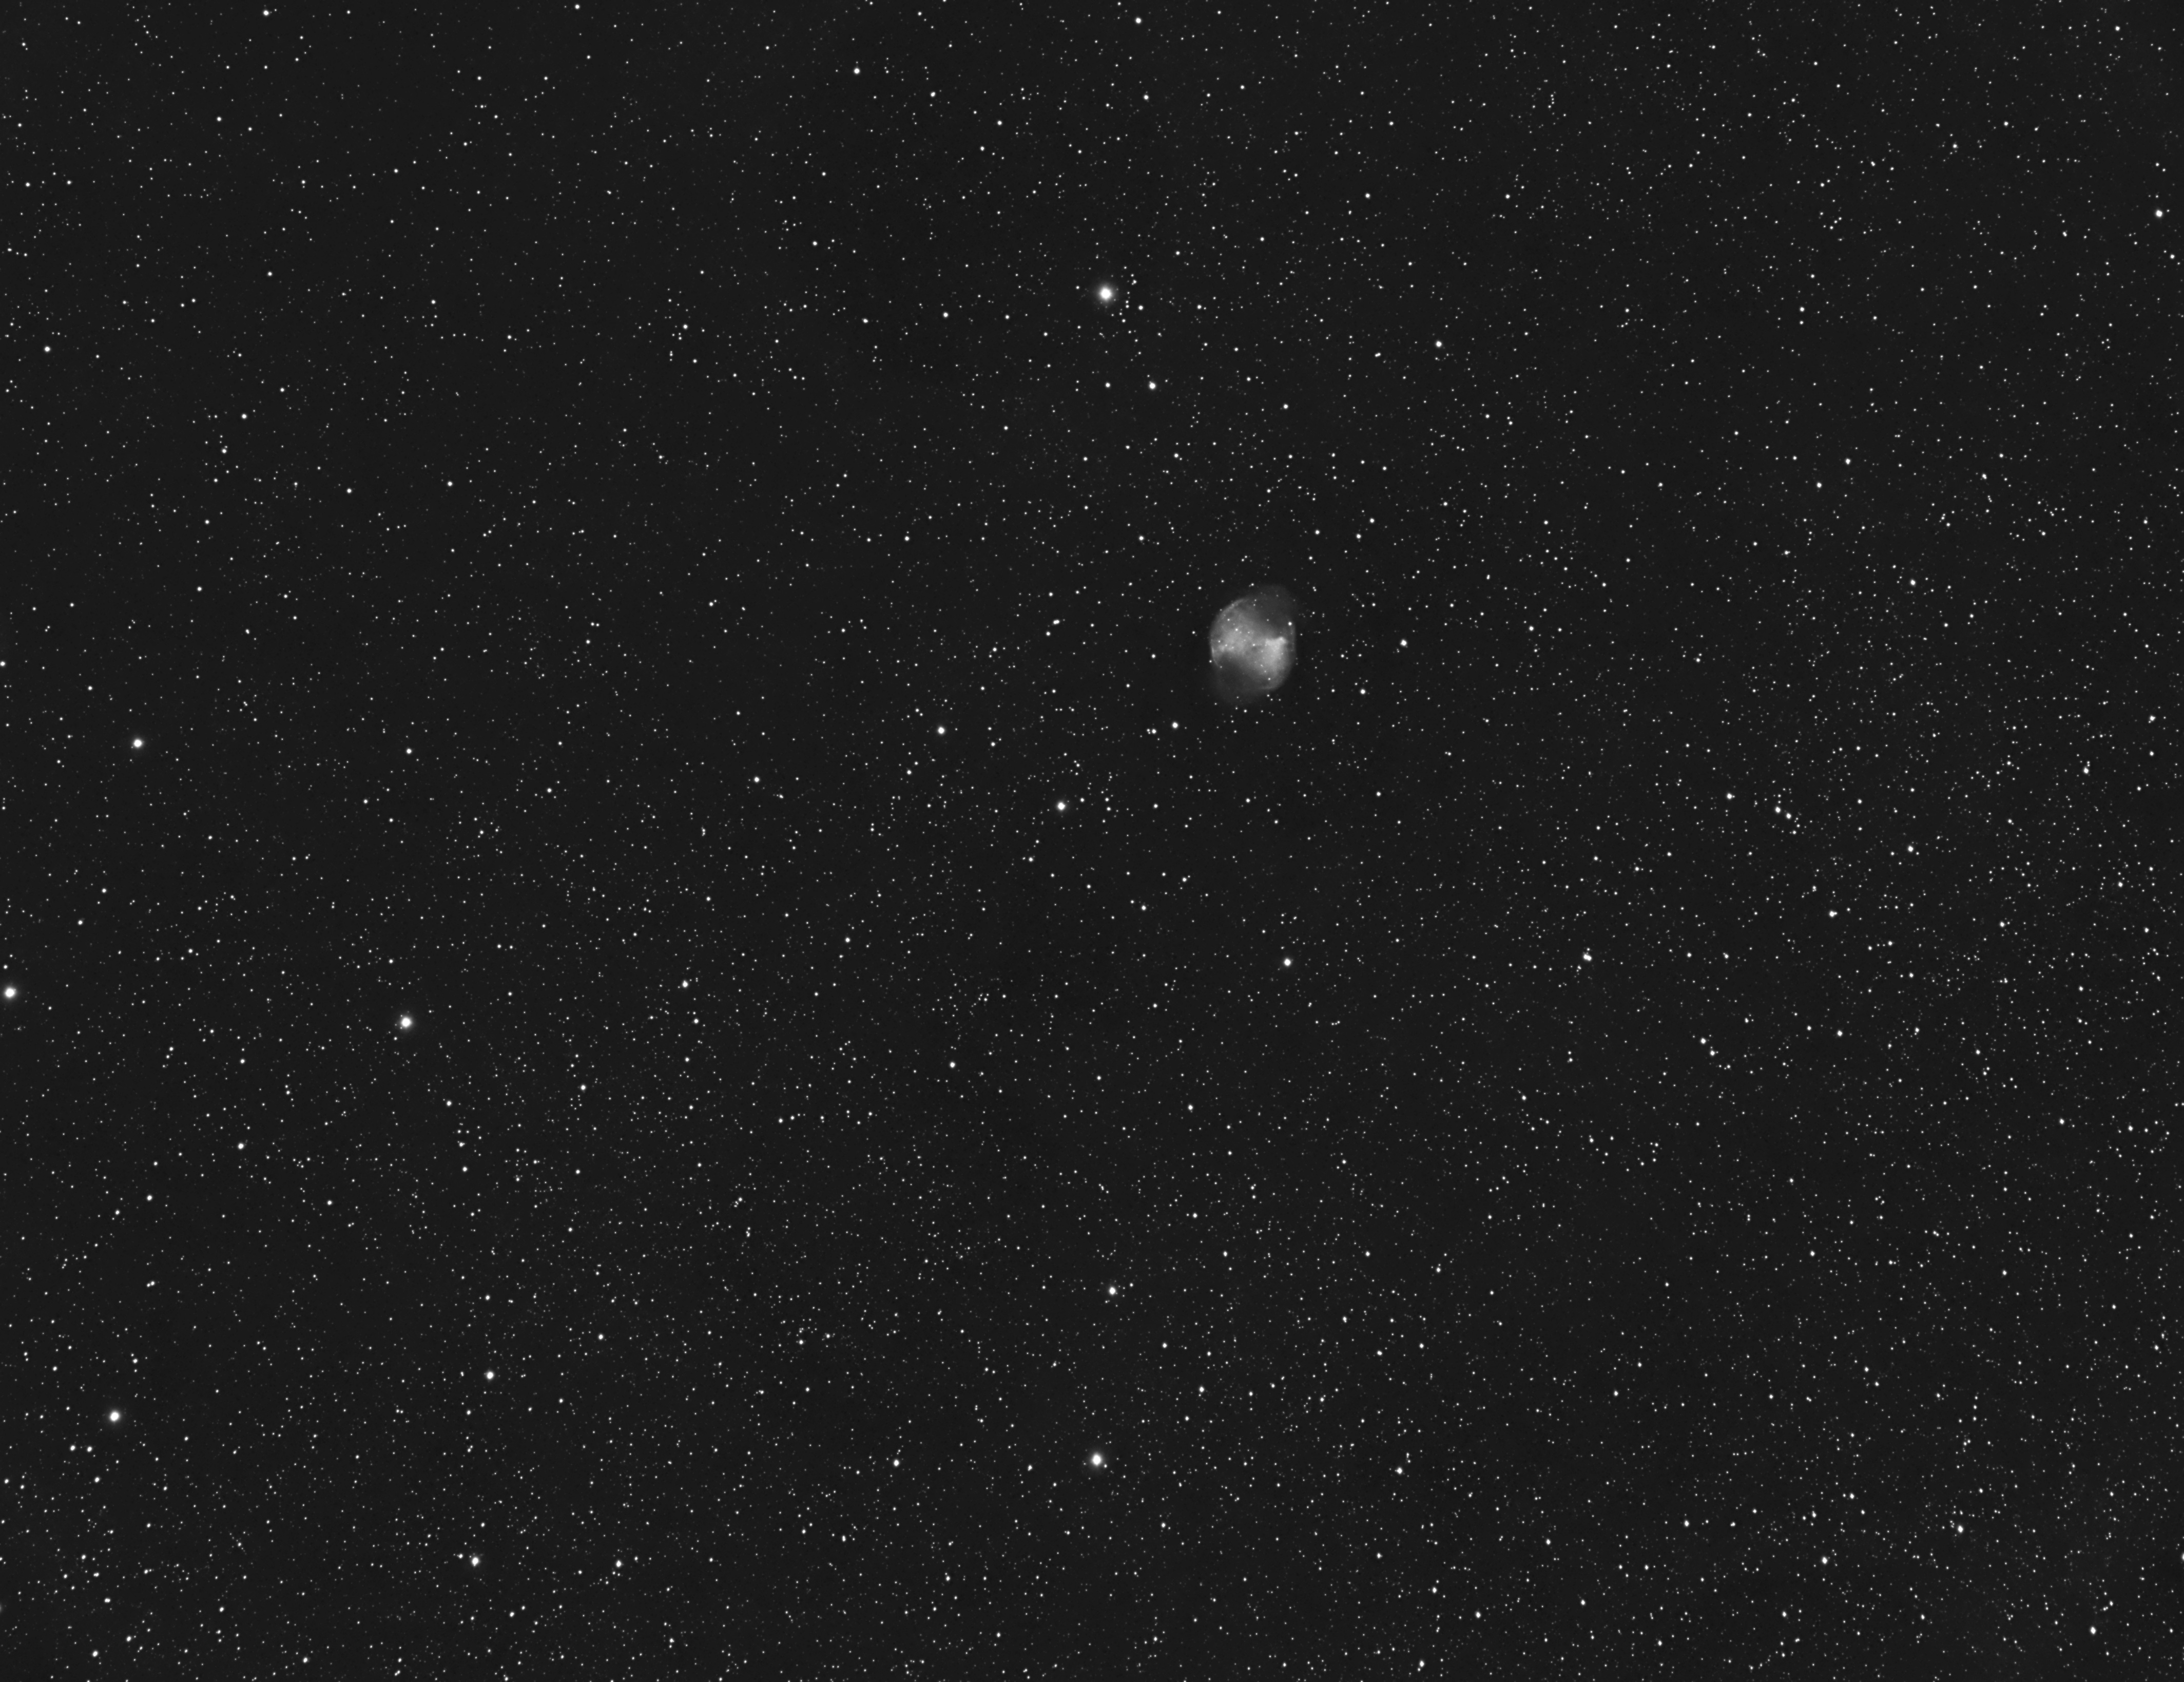 ASI1600MM-COOL first light - M27 (Dumbbell Nebula)